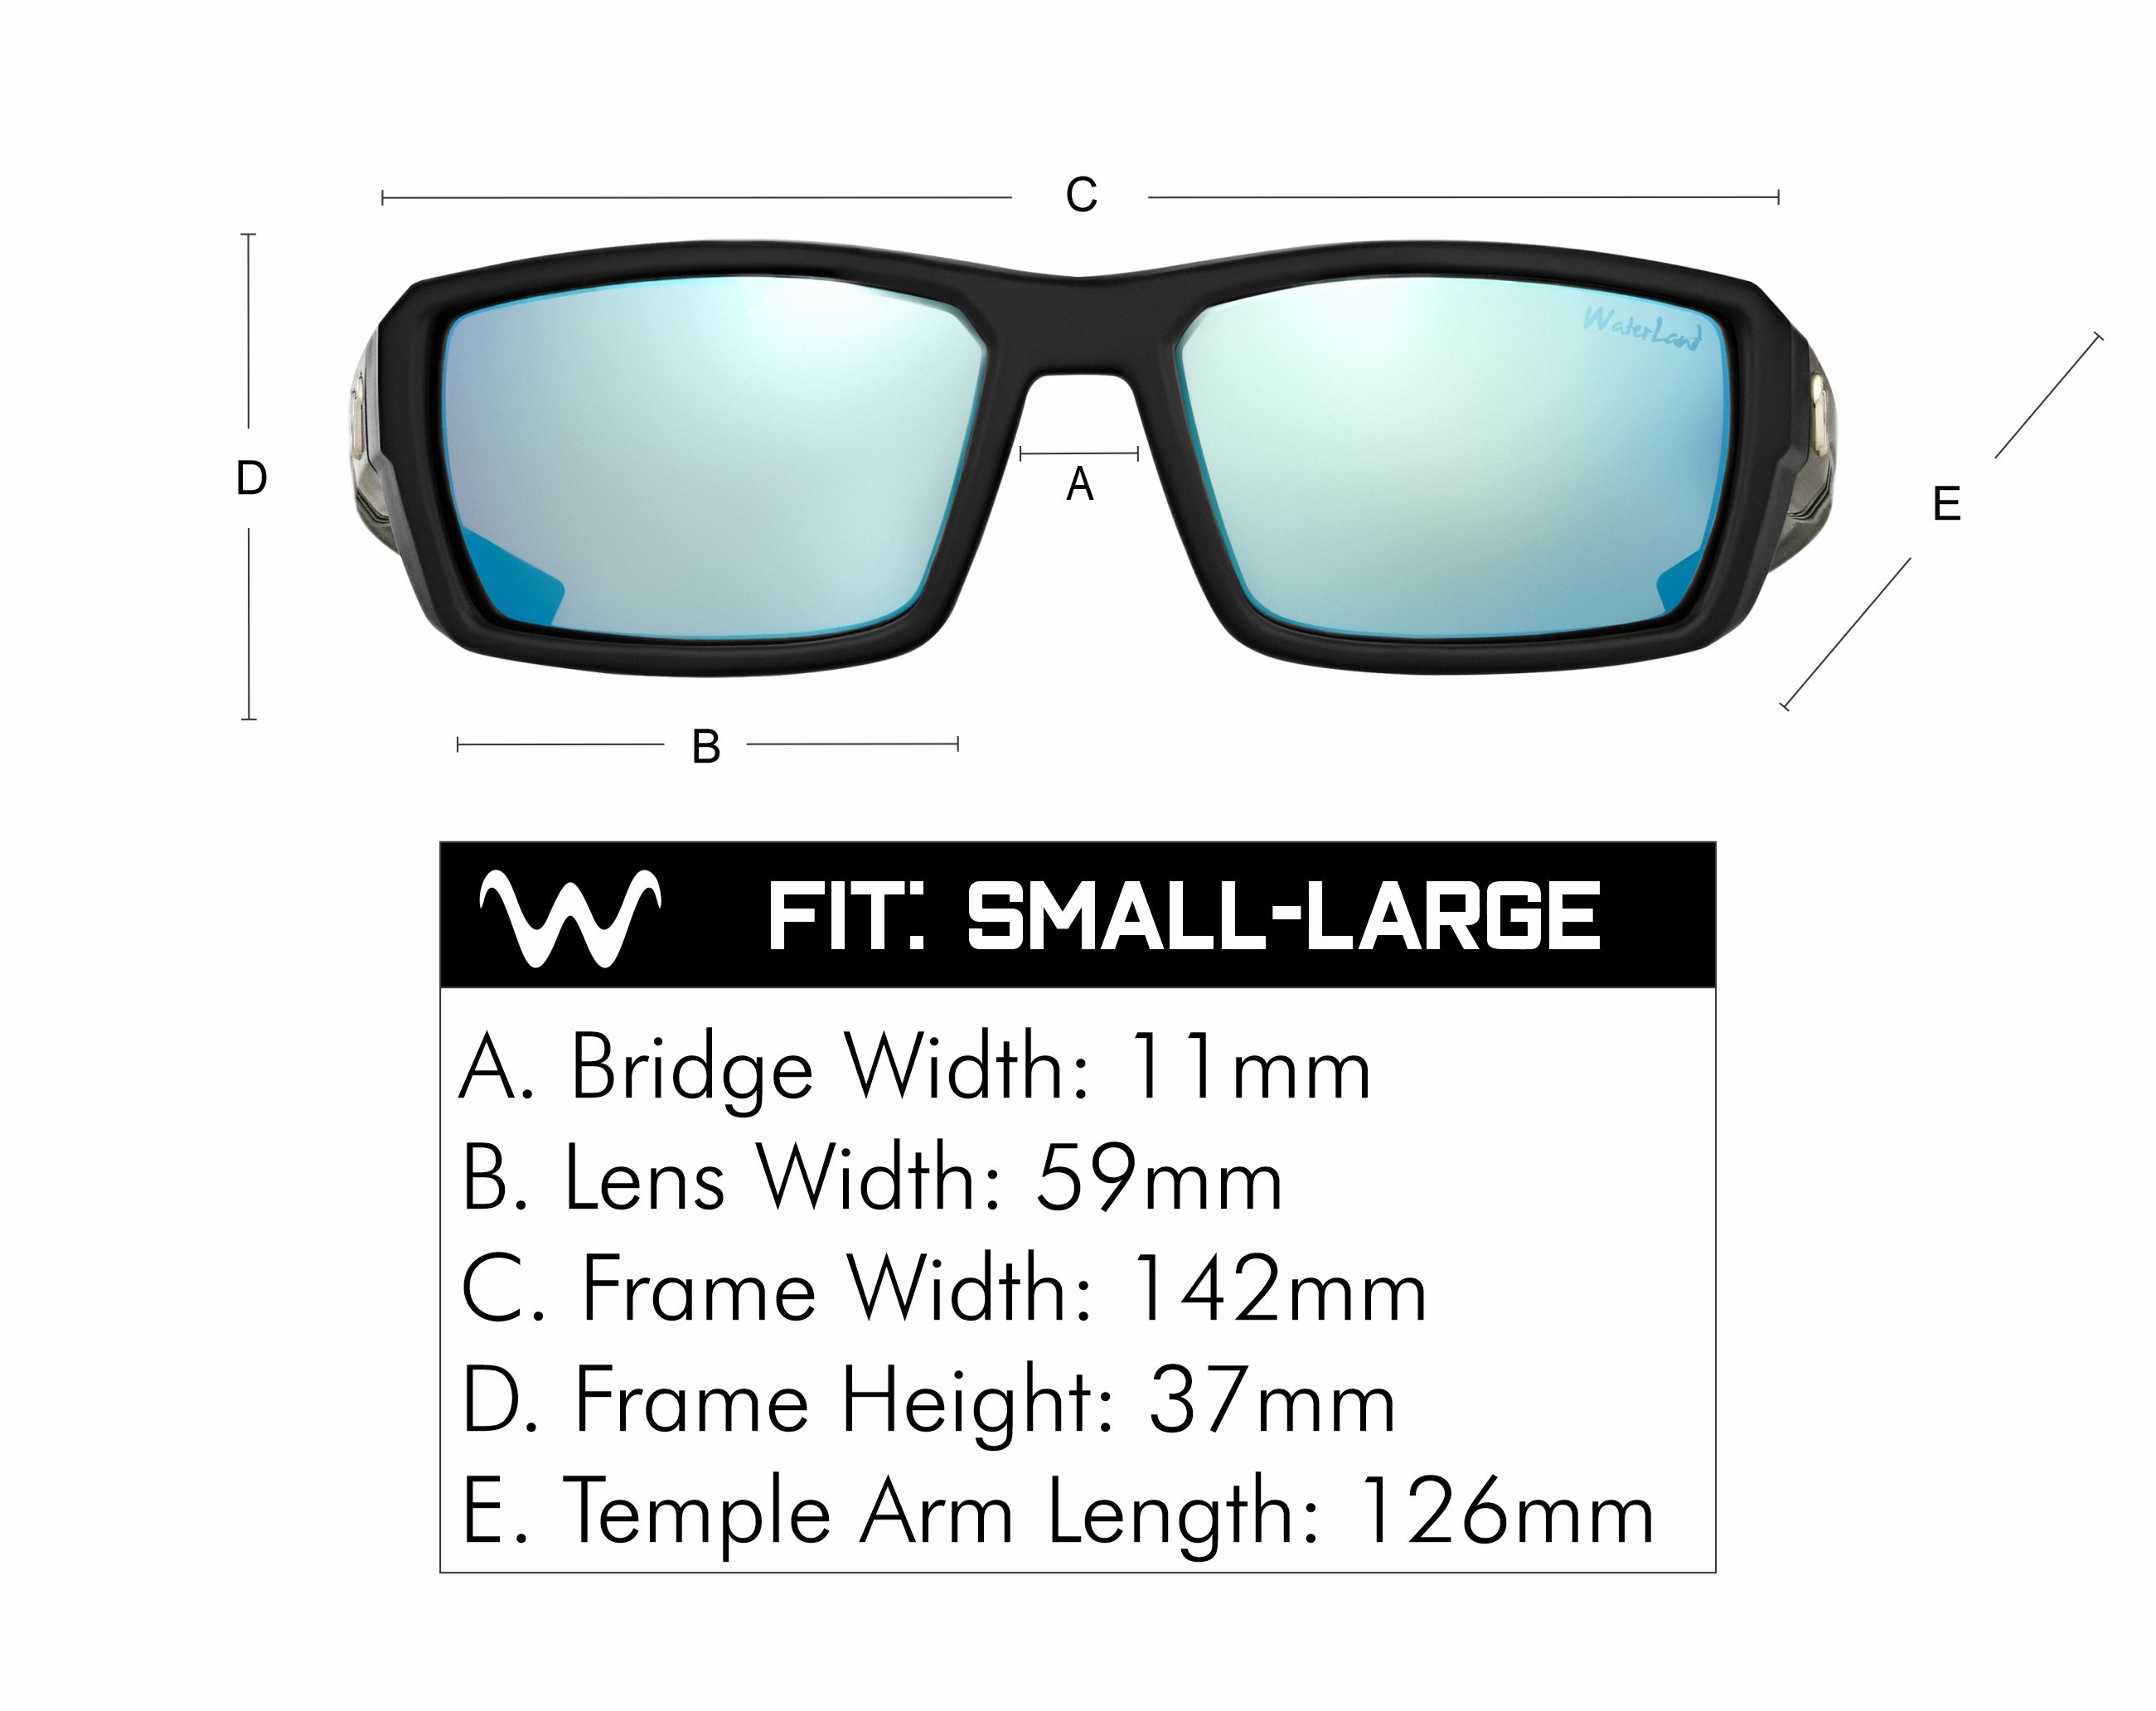 WaterLand Milliken Sunglasses BlackWater Frame with Blue Mirror Glass